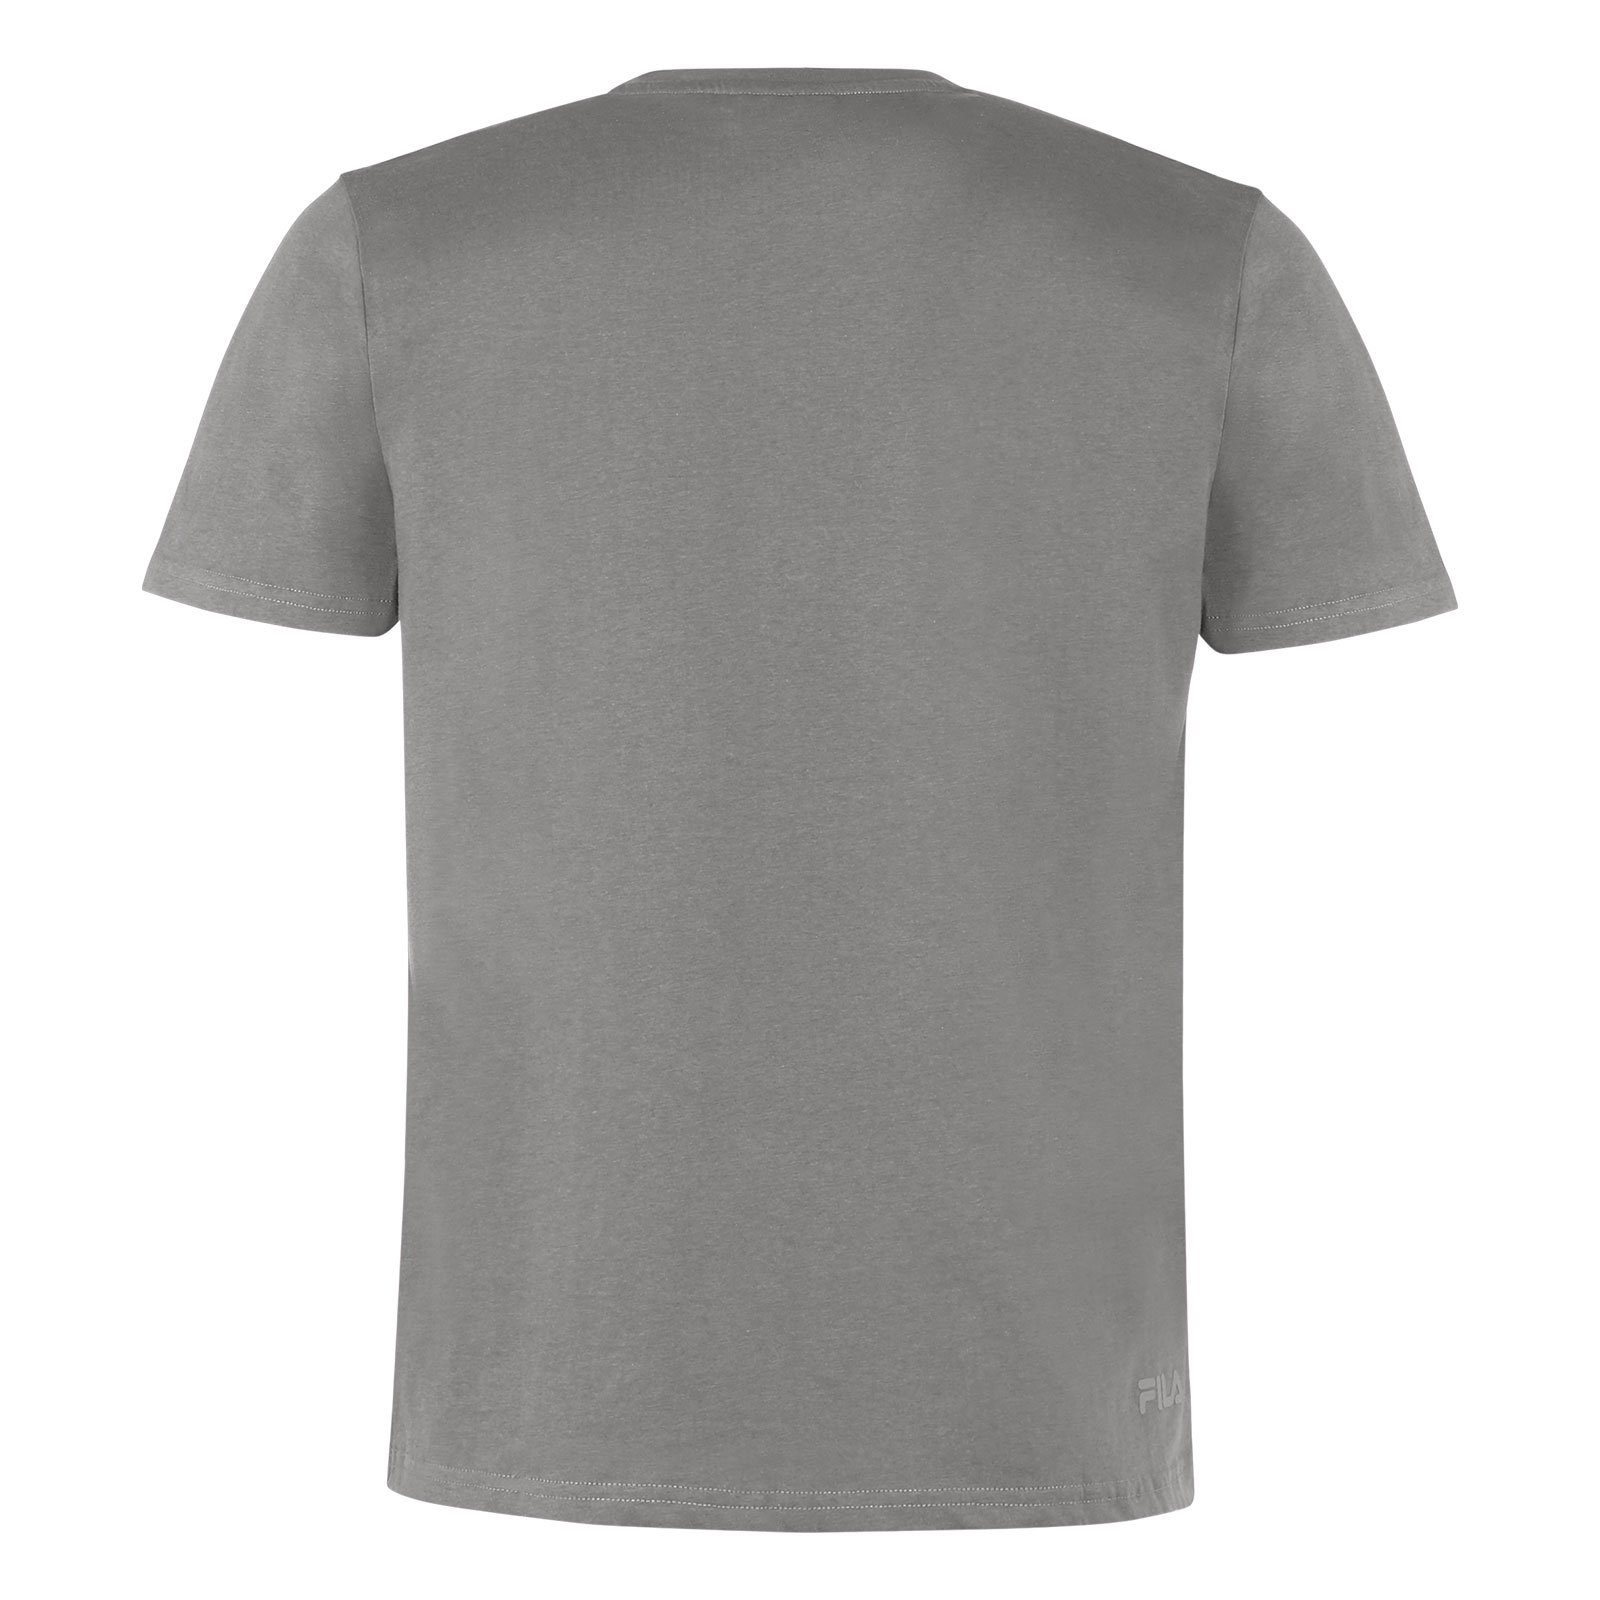 Tee Fila Outline-FILA-Logo gull mit Bibbiena 80028 stylischem T-Shirt